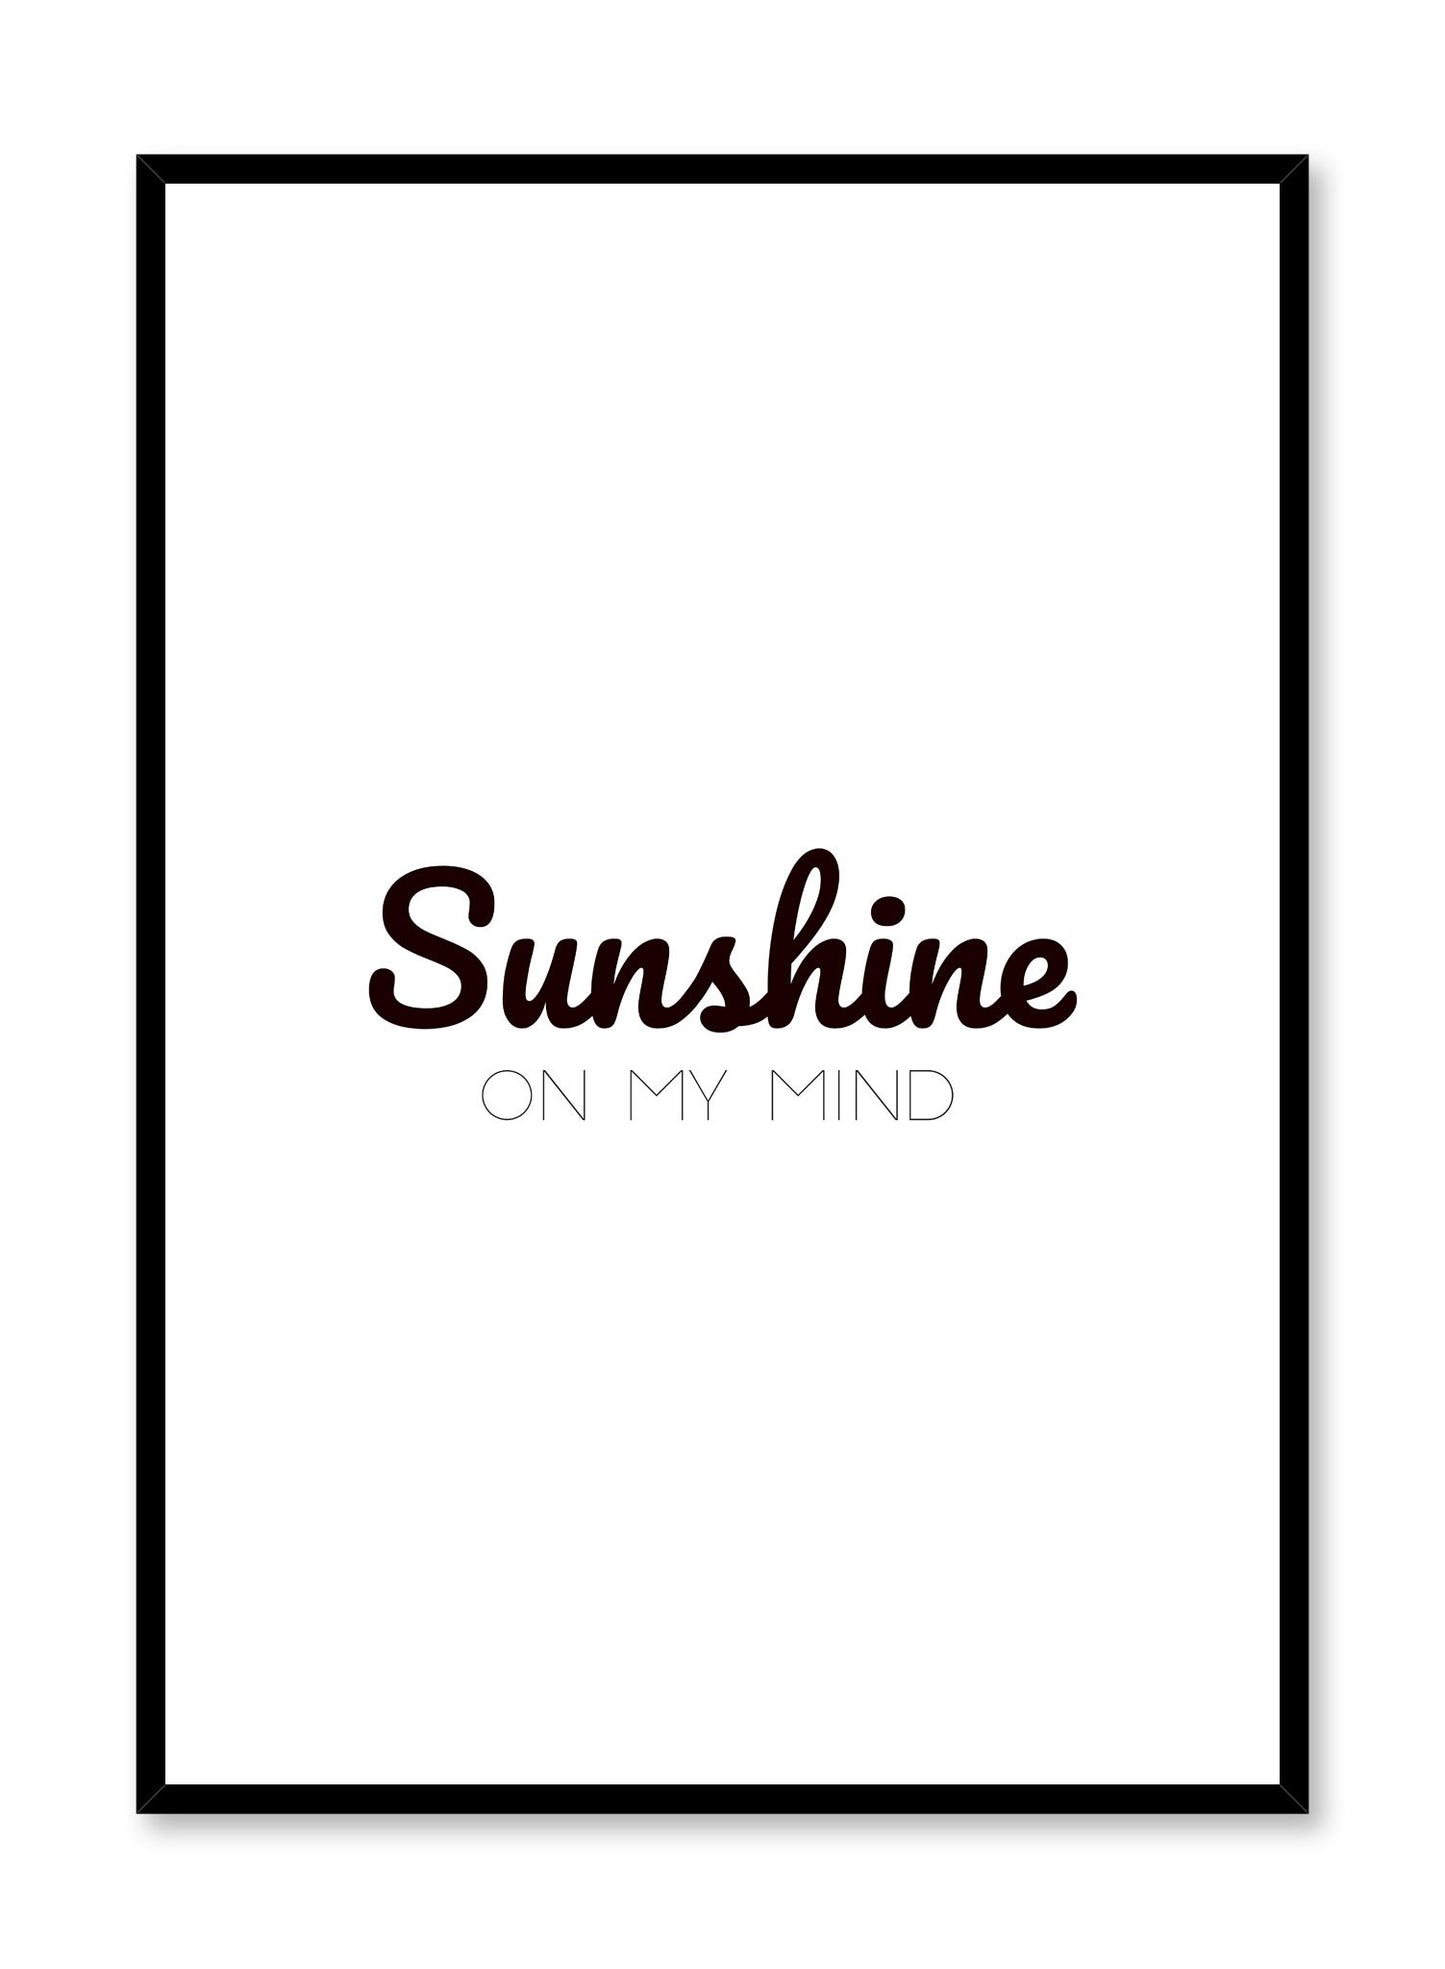 Sunshine on my mind modern minimalist typography art print by Opposite Wall